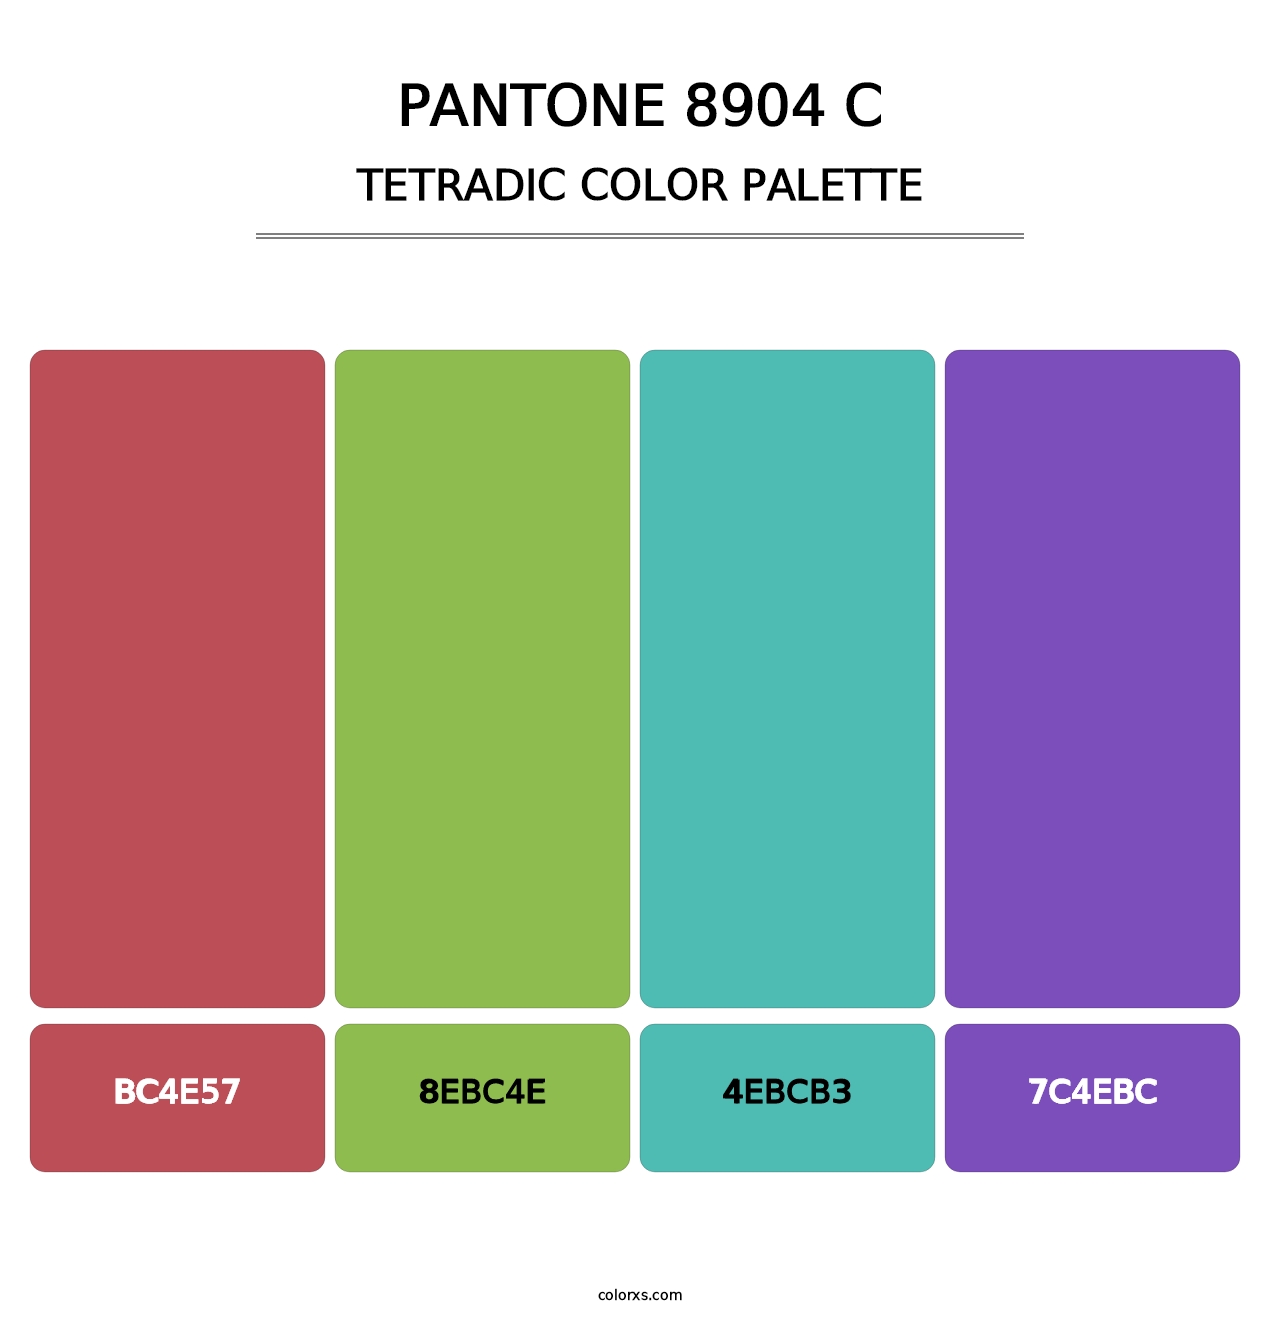 PANTONE 8904 C - Tetradic Color Palette